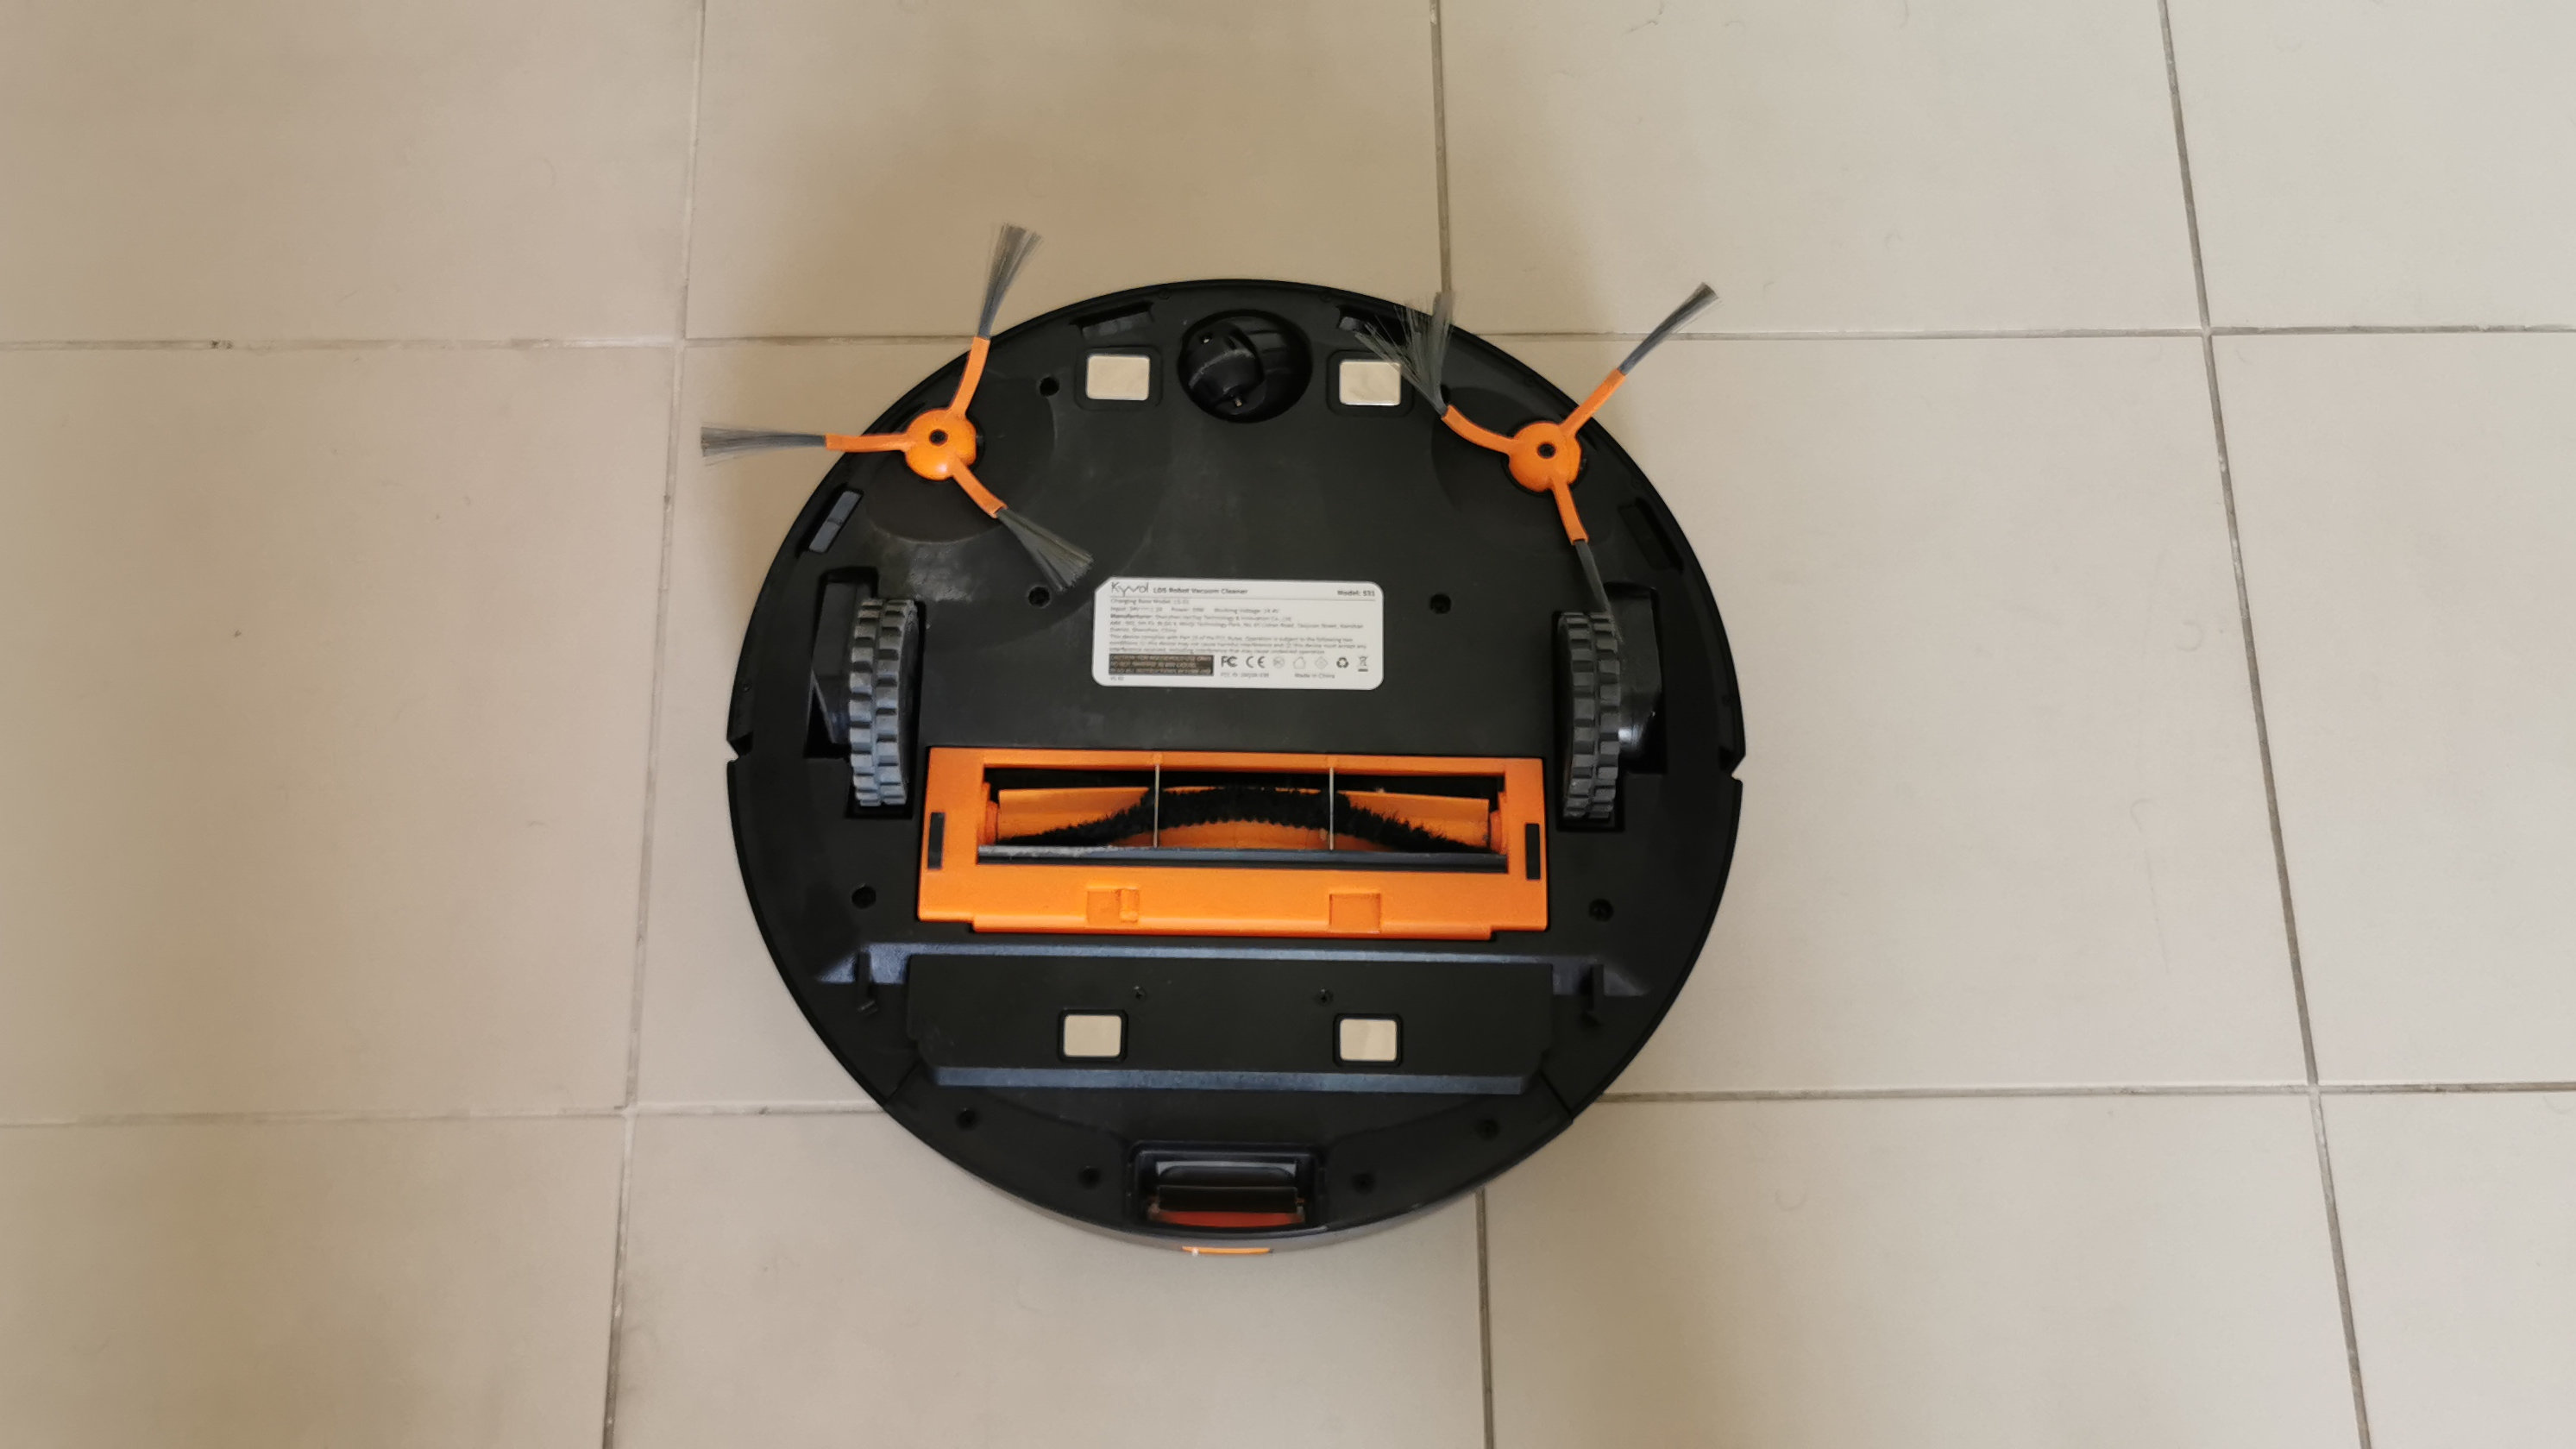 Kyvol Cybovac S31 Robot Vacuum